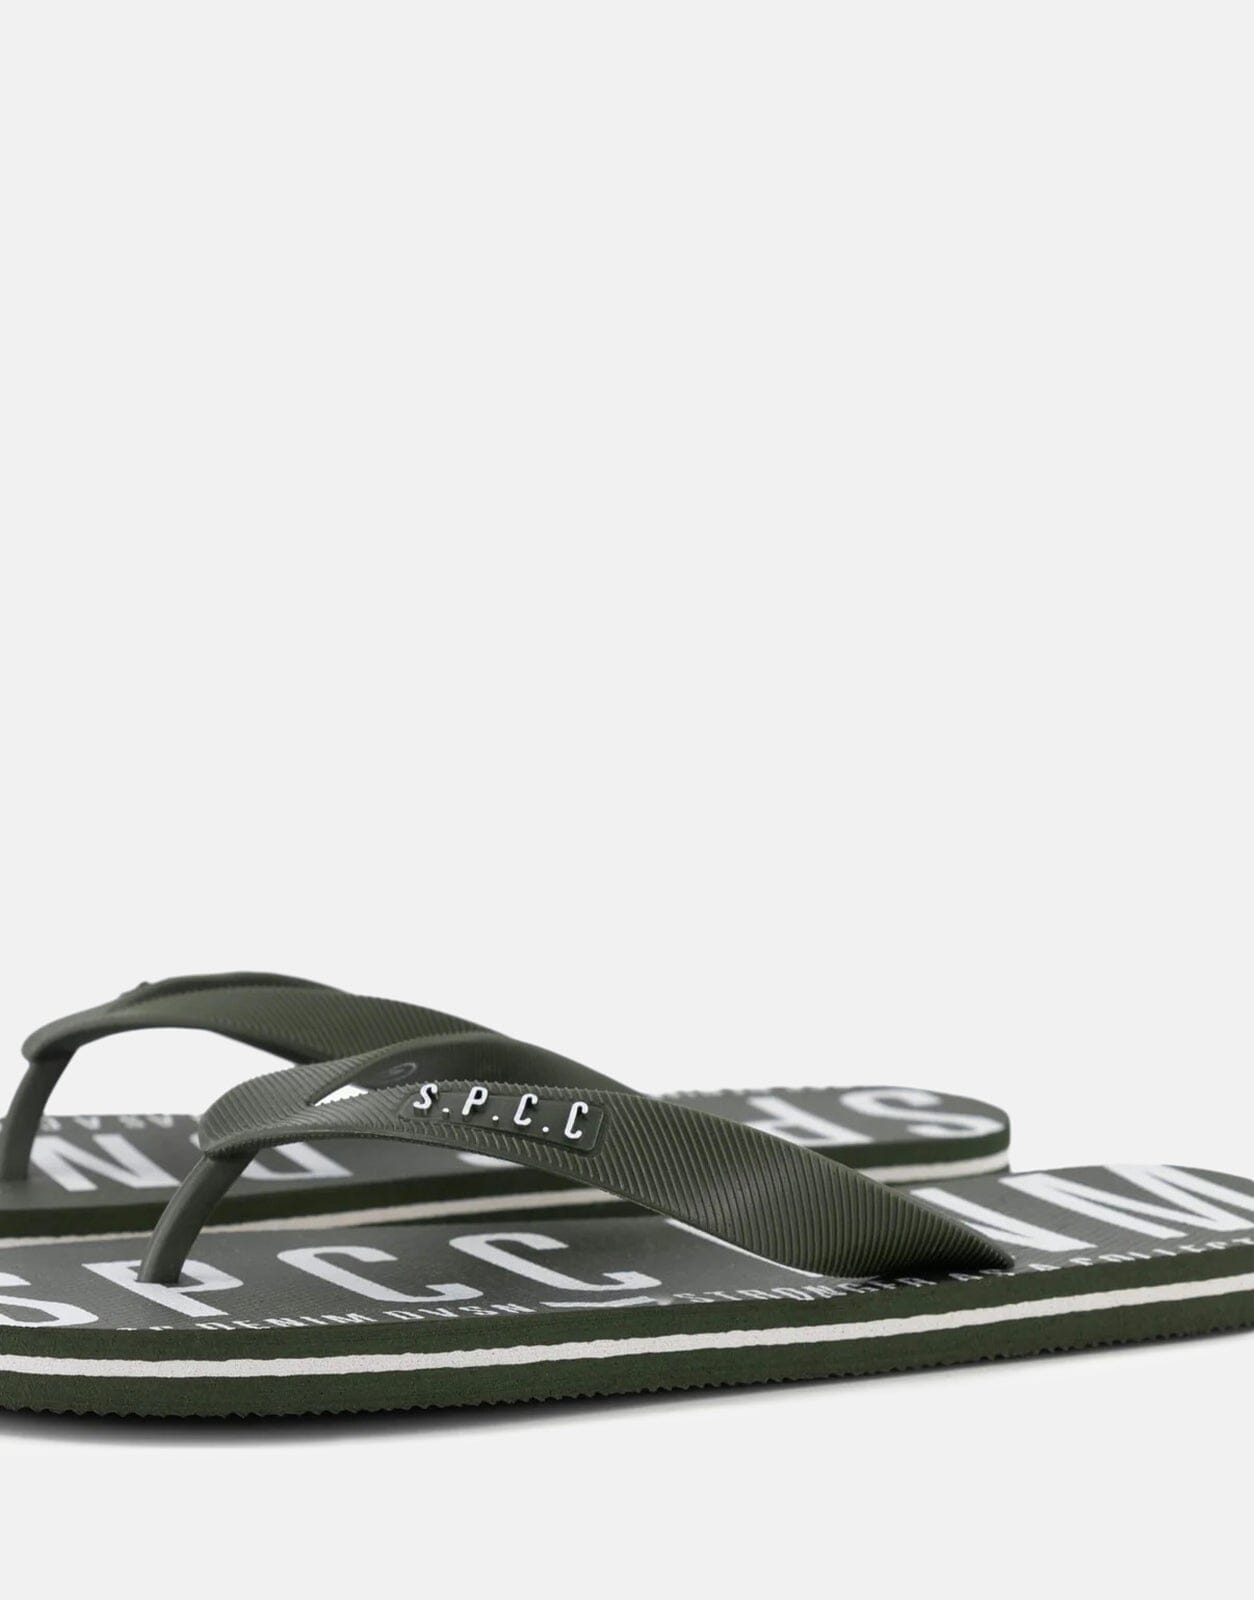 SPCC Oliveira Fatigue Flip Flops - Subwear